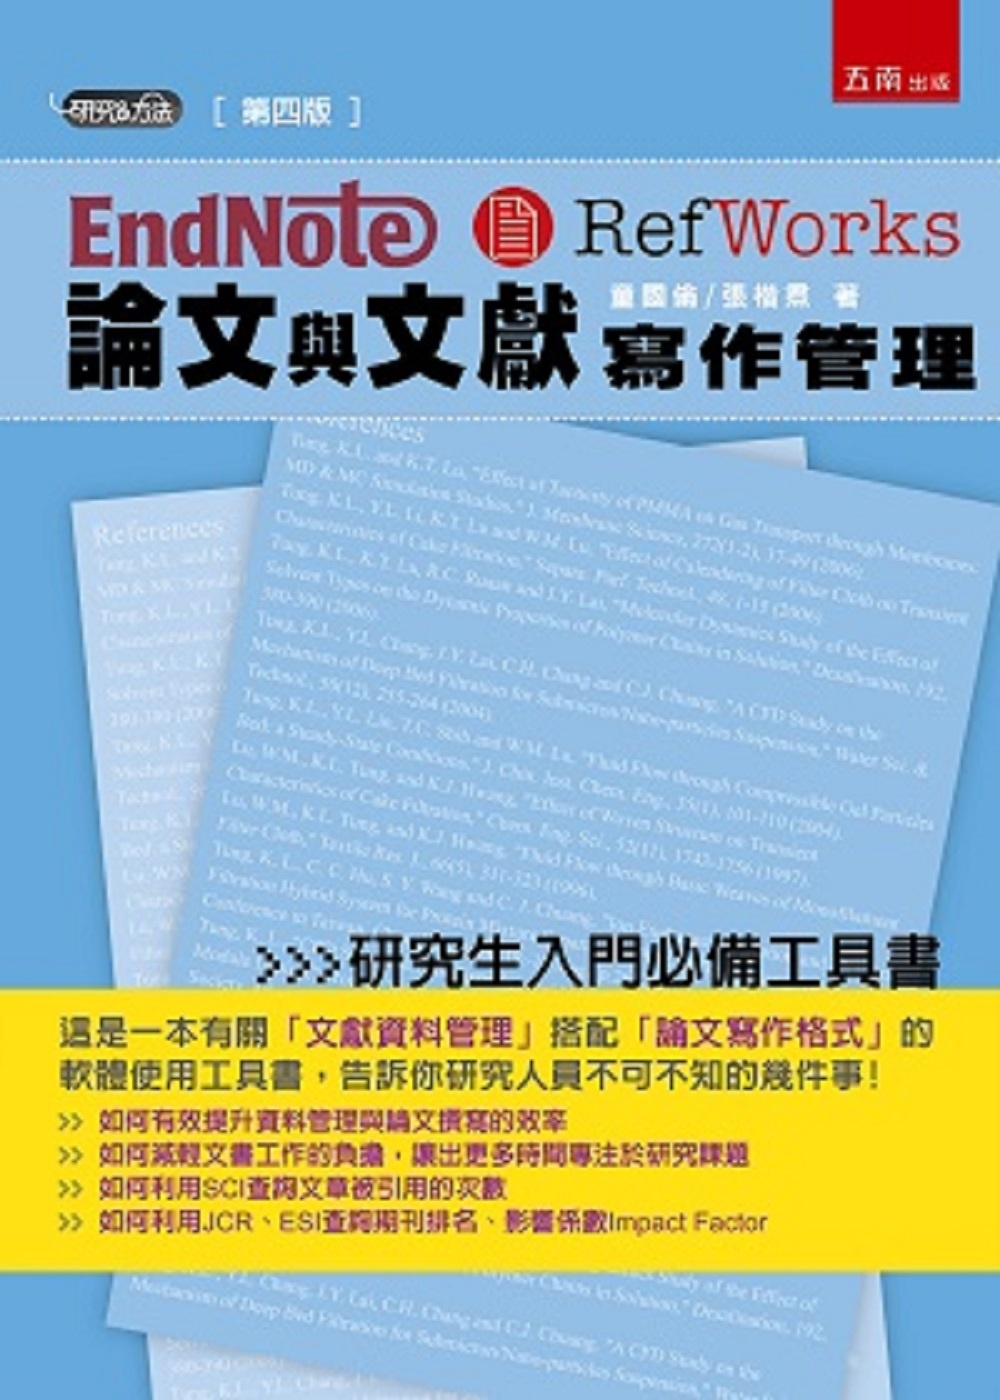 Endnote & Refworks 論文與文獻寫作管理（4...